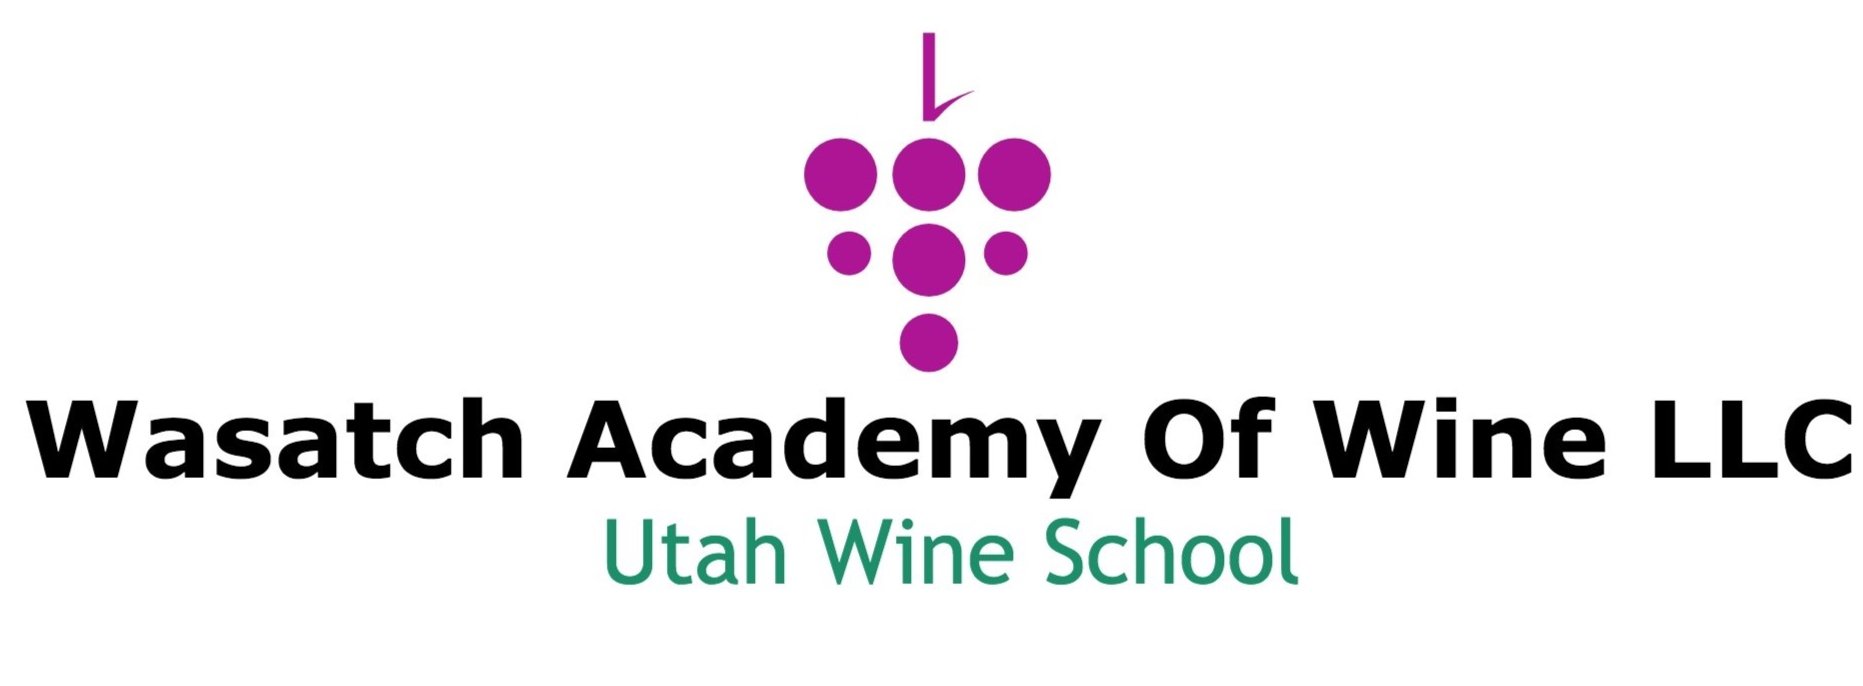 wasatch-academy-of-wine-llc-logo_1_orig.jpg